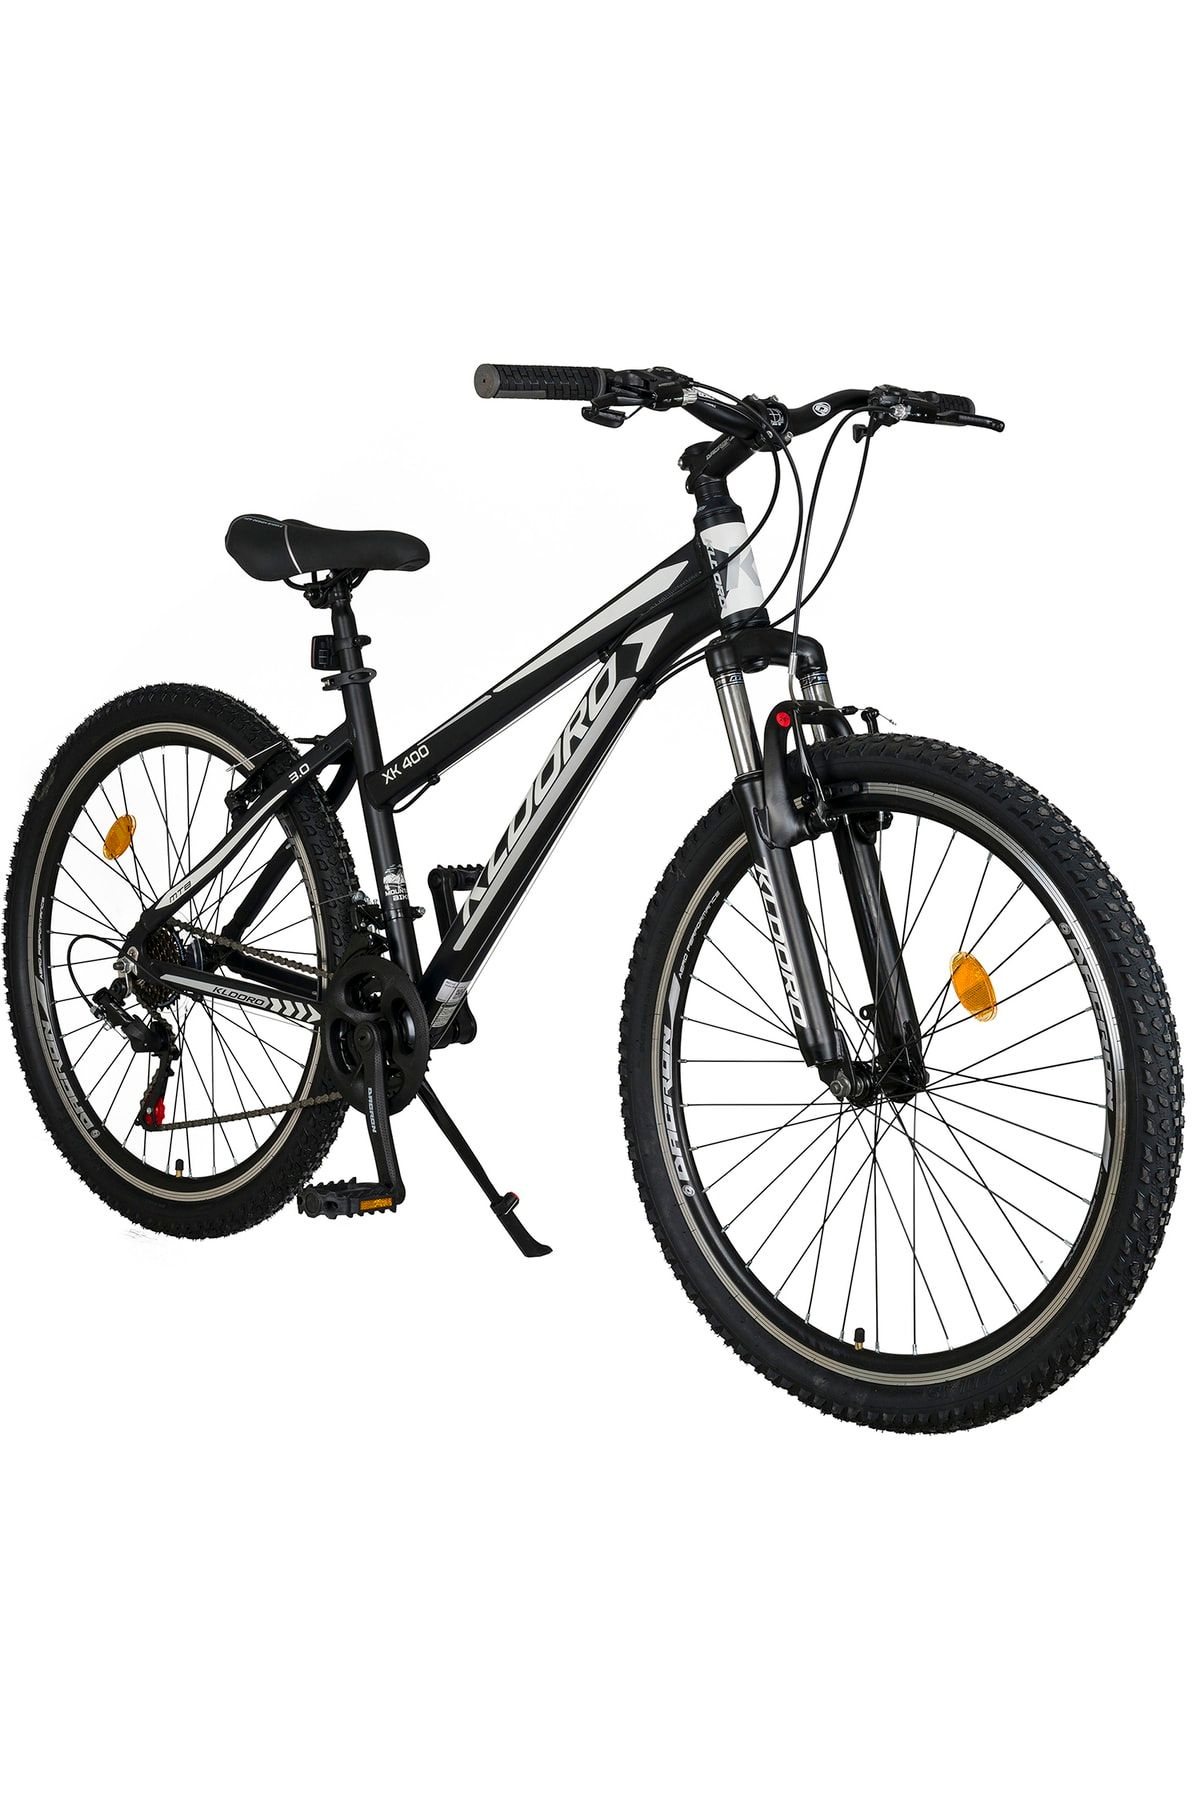 Kldoro Xk400 3.0 Alüminyum 26 Jant Bisiklet 21 Vites V Fren Dağ Bisikleti